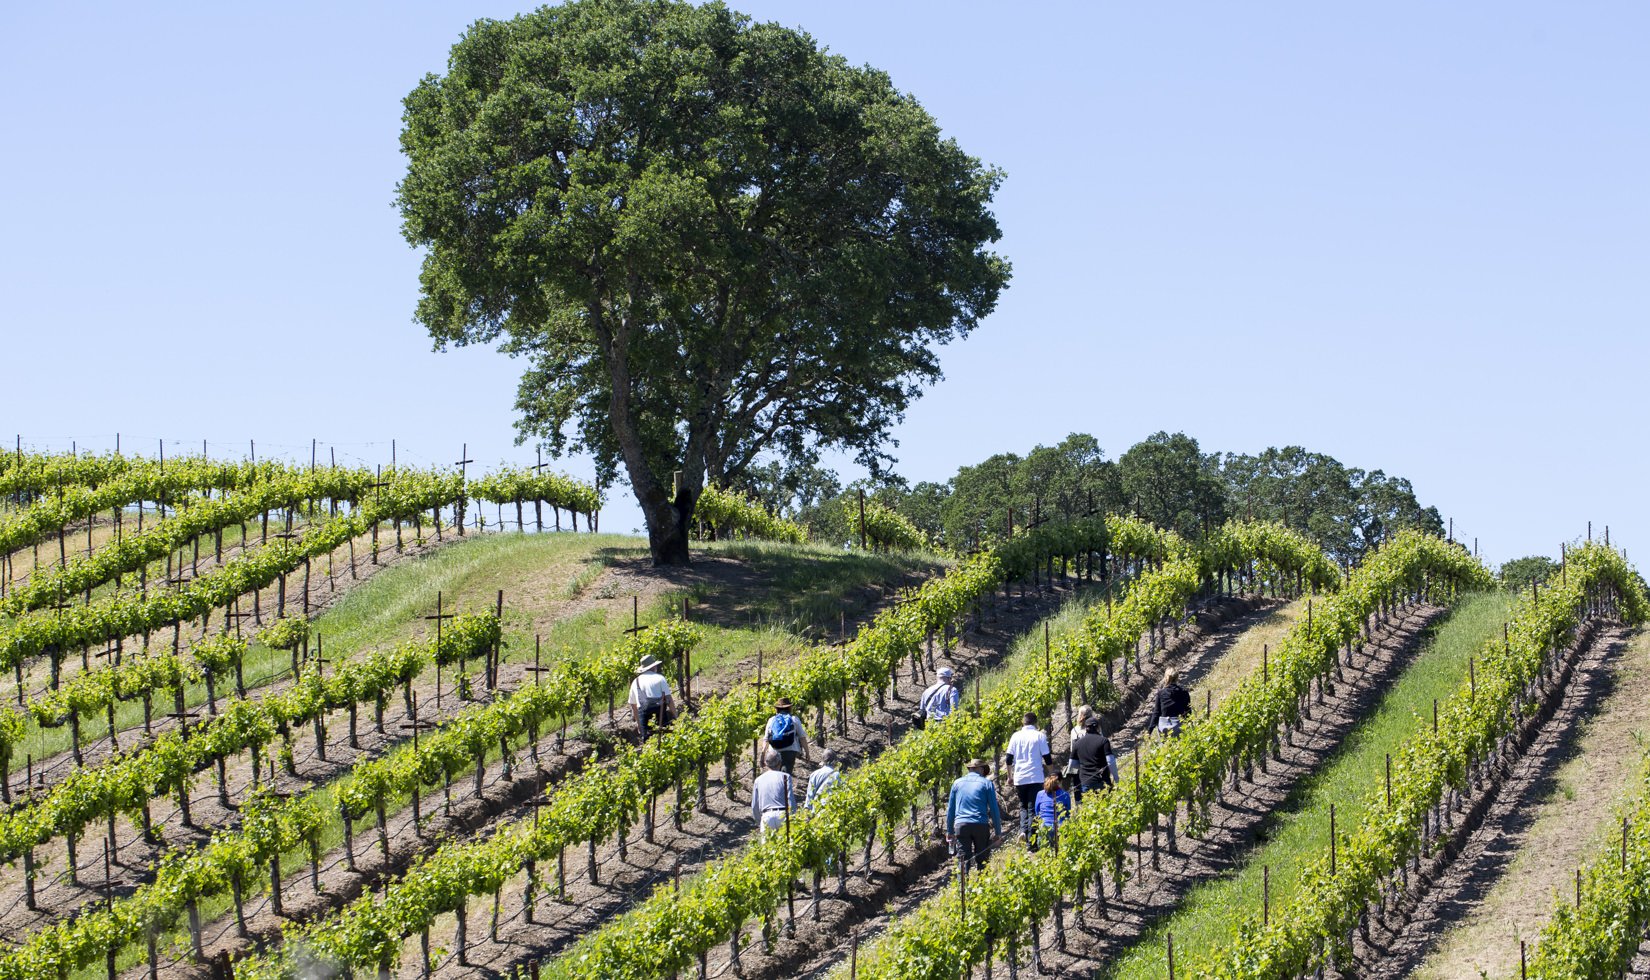 Guests walking through the vineyards on a Spring Vineyard Hike at Jordan Winery.